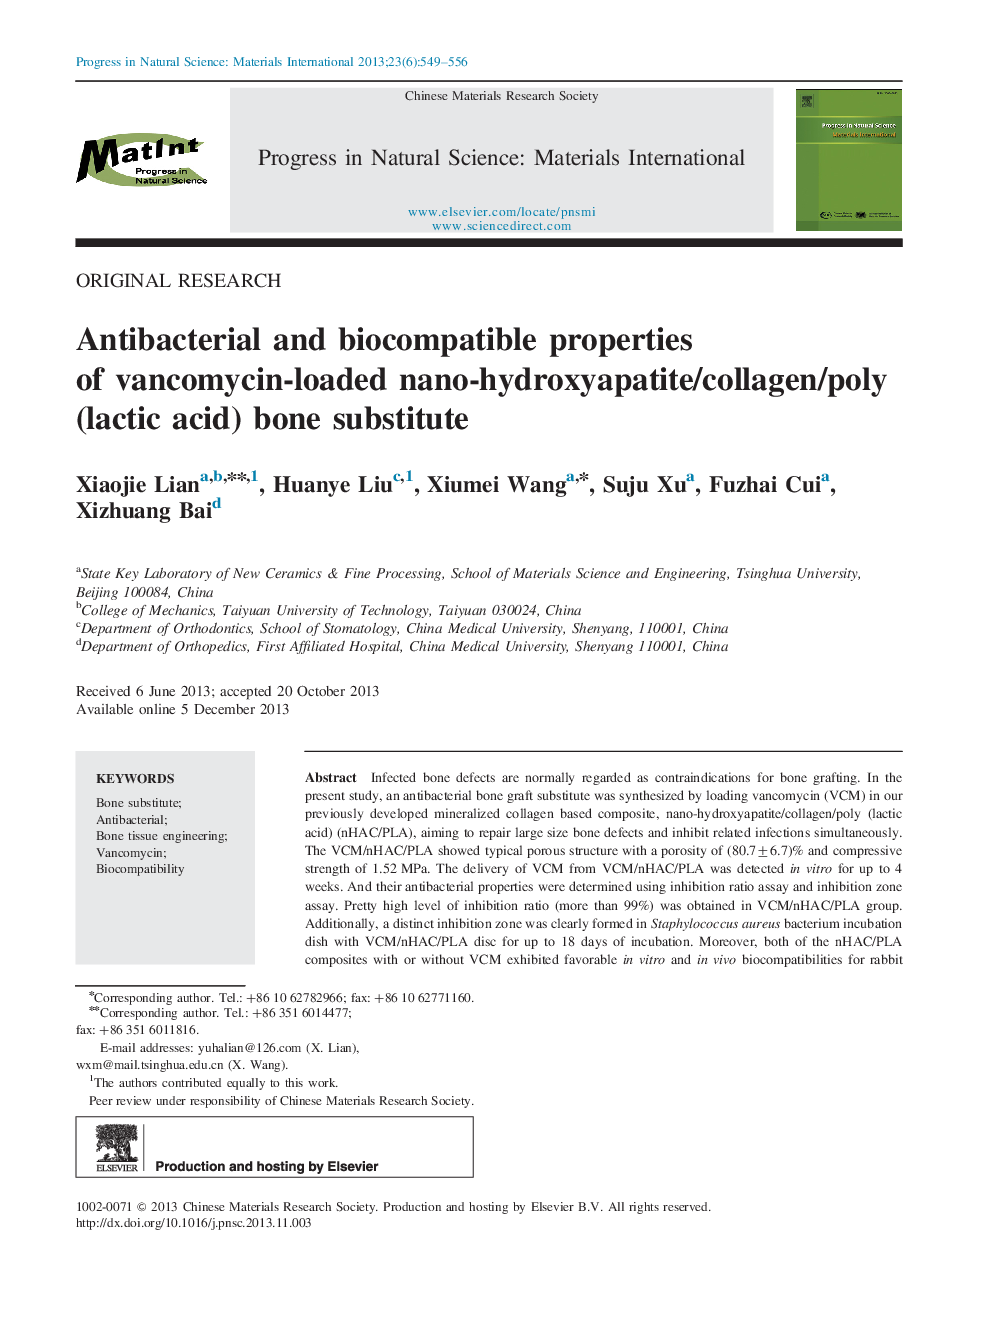 Antibacterial and biocompatible properties of vancomycin-loaded nano-hydroxyapatite/collagen/poly (lactic acid) bone substitute